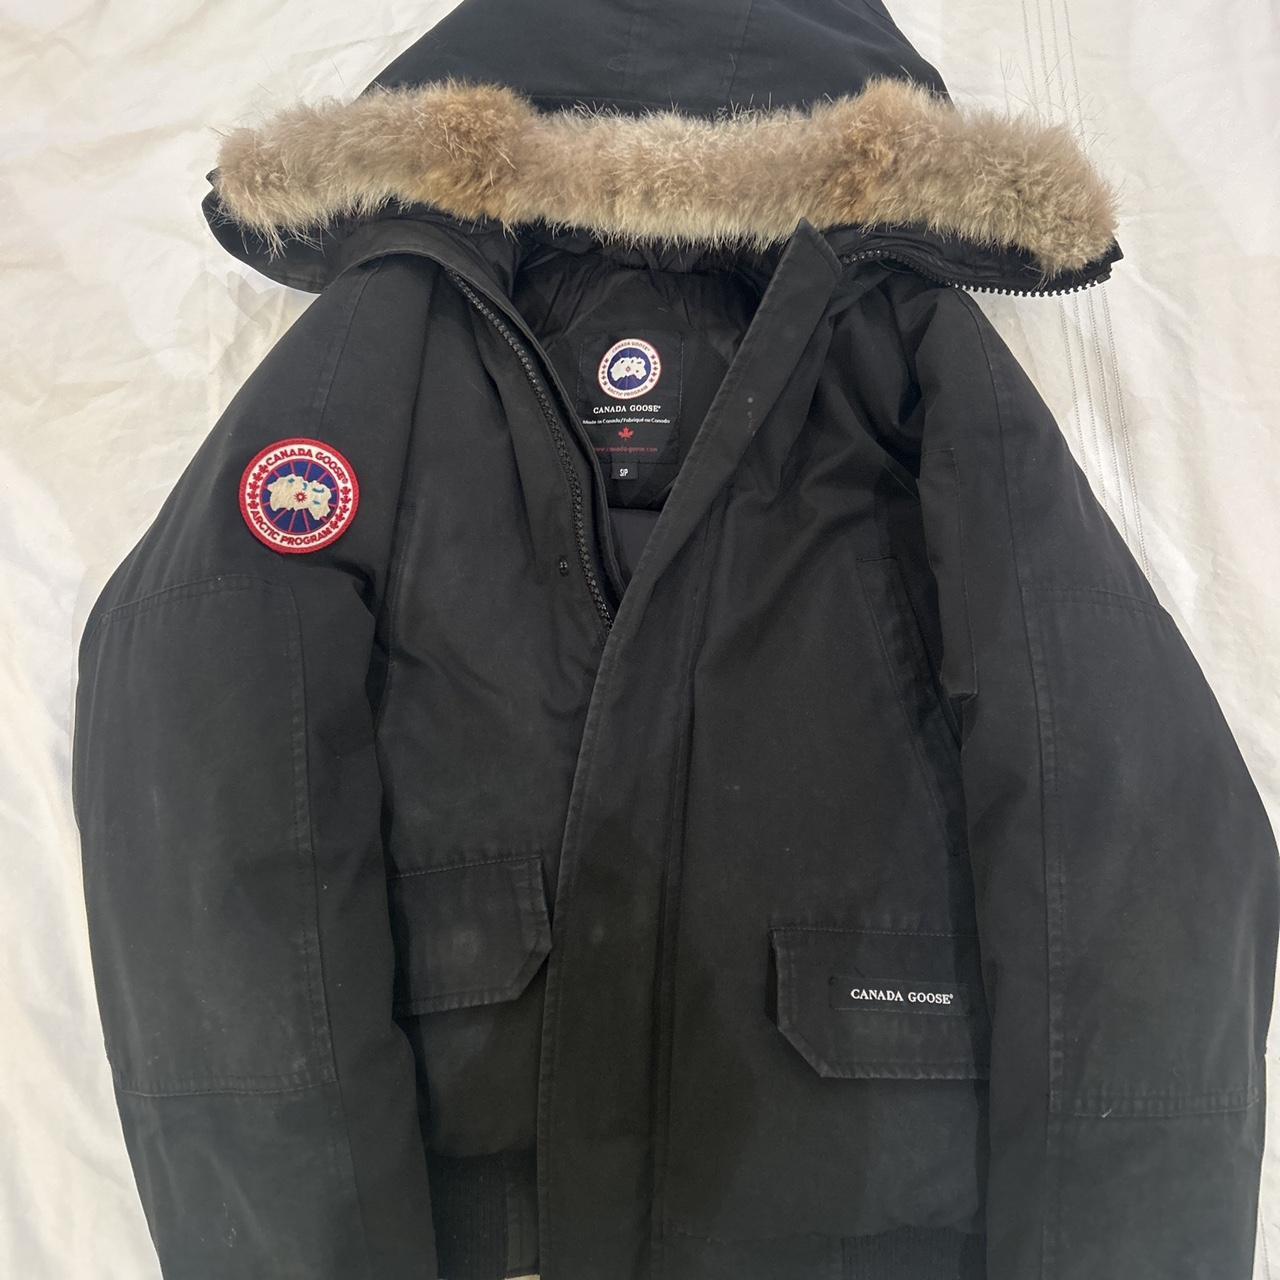 Canada goose chilliwack women’s black jacket in a... - Depop